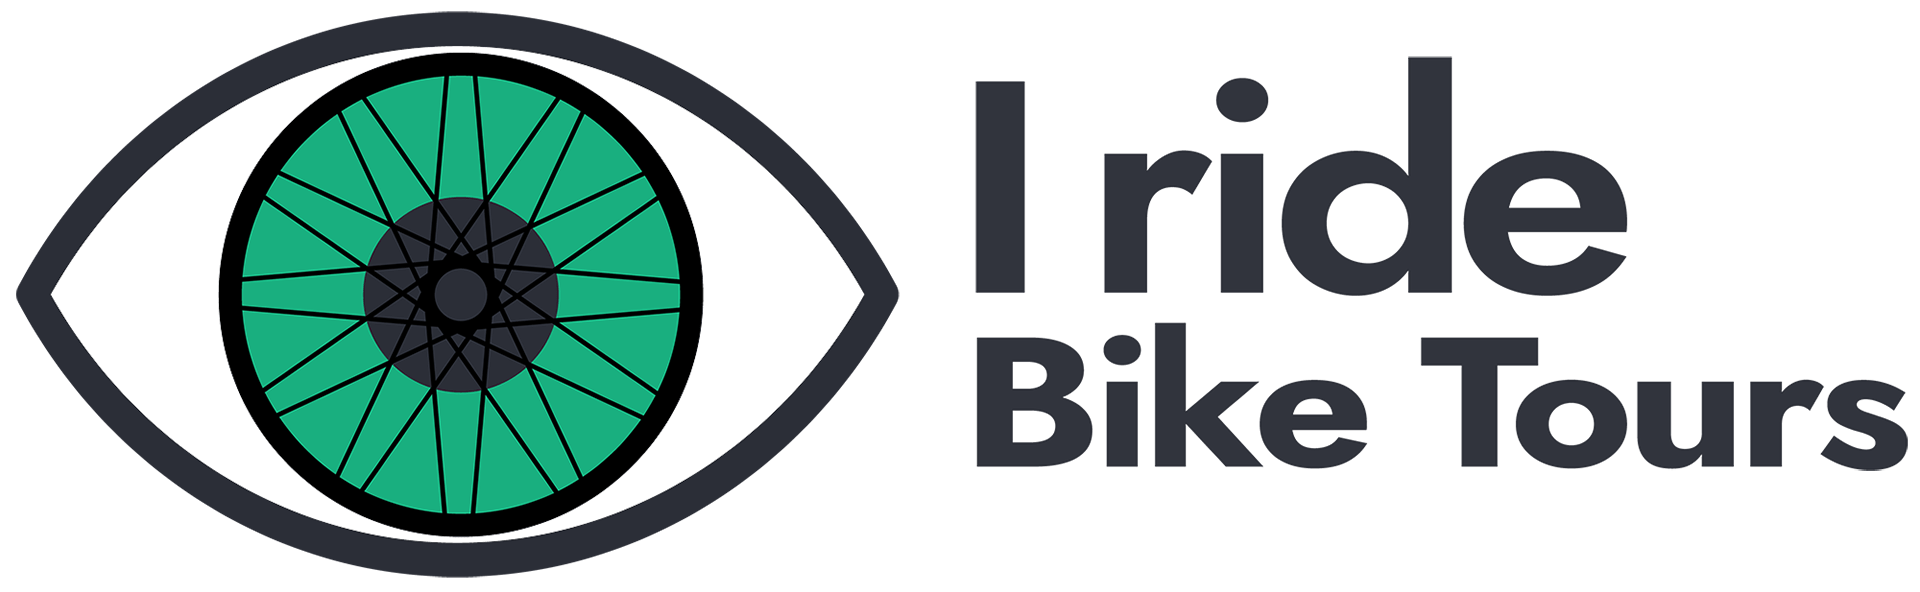 Iride Bike Tours LOGO